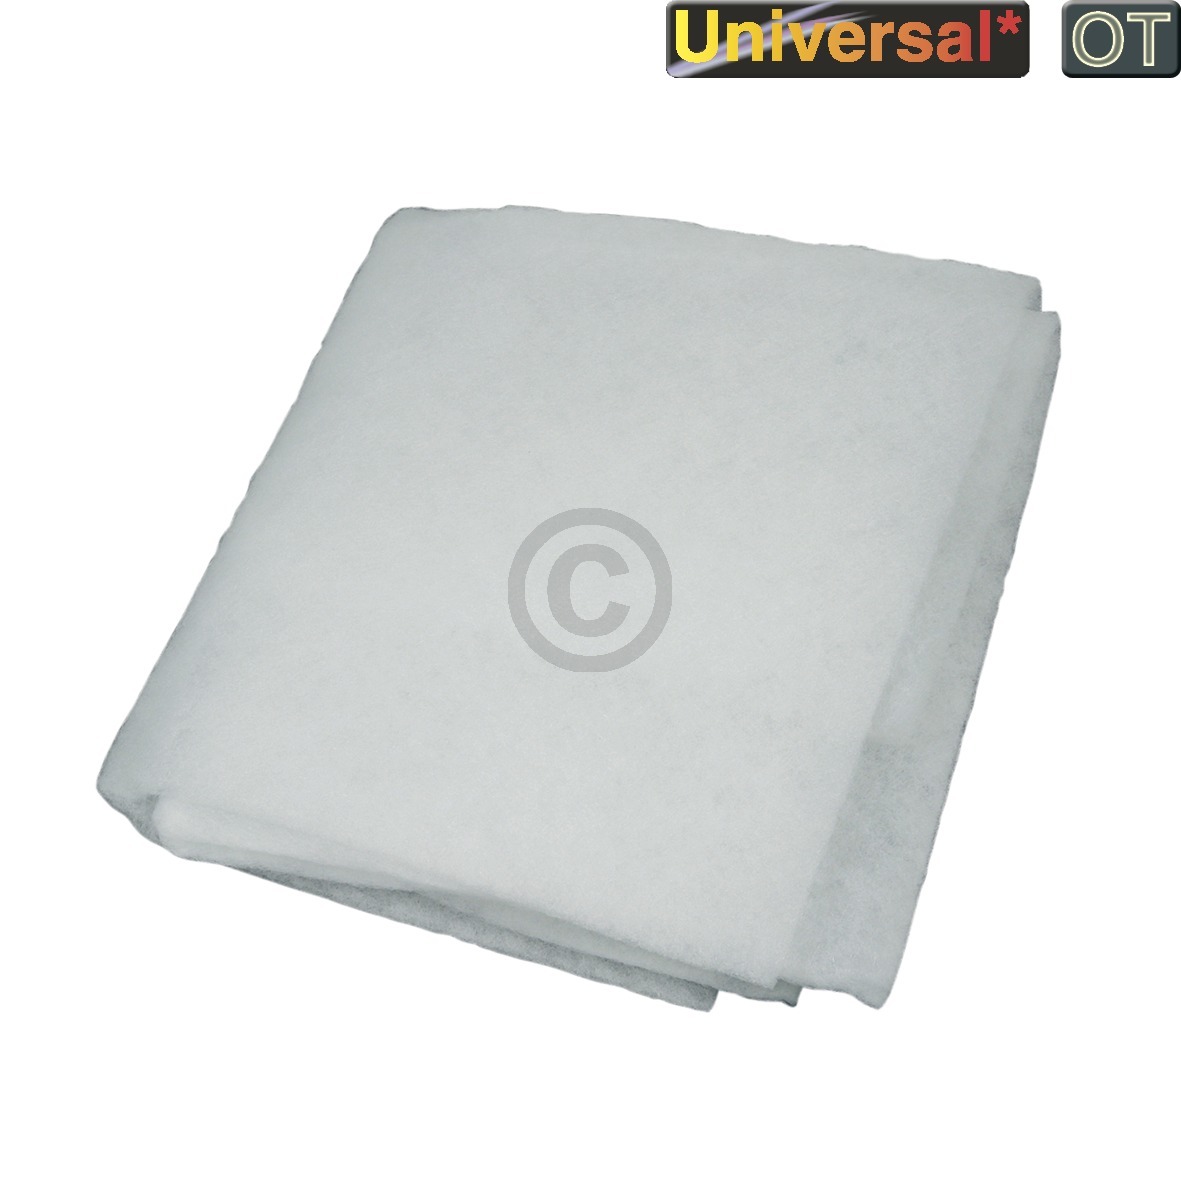 Fettfiltermatte 970x470mm 150g/m² Universal Wpro UGF016